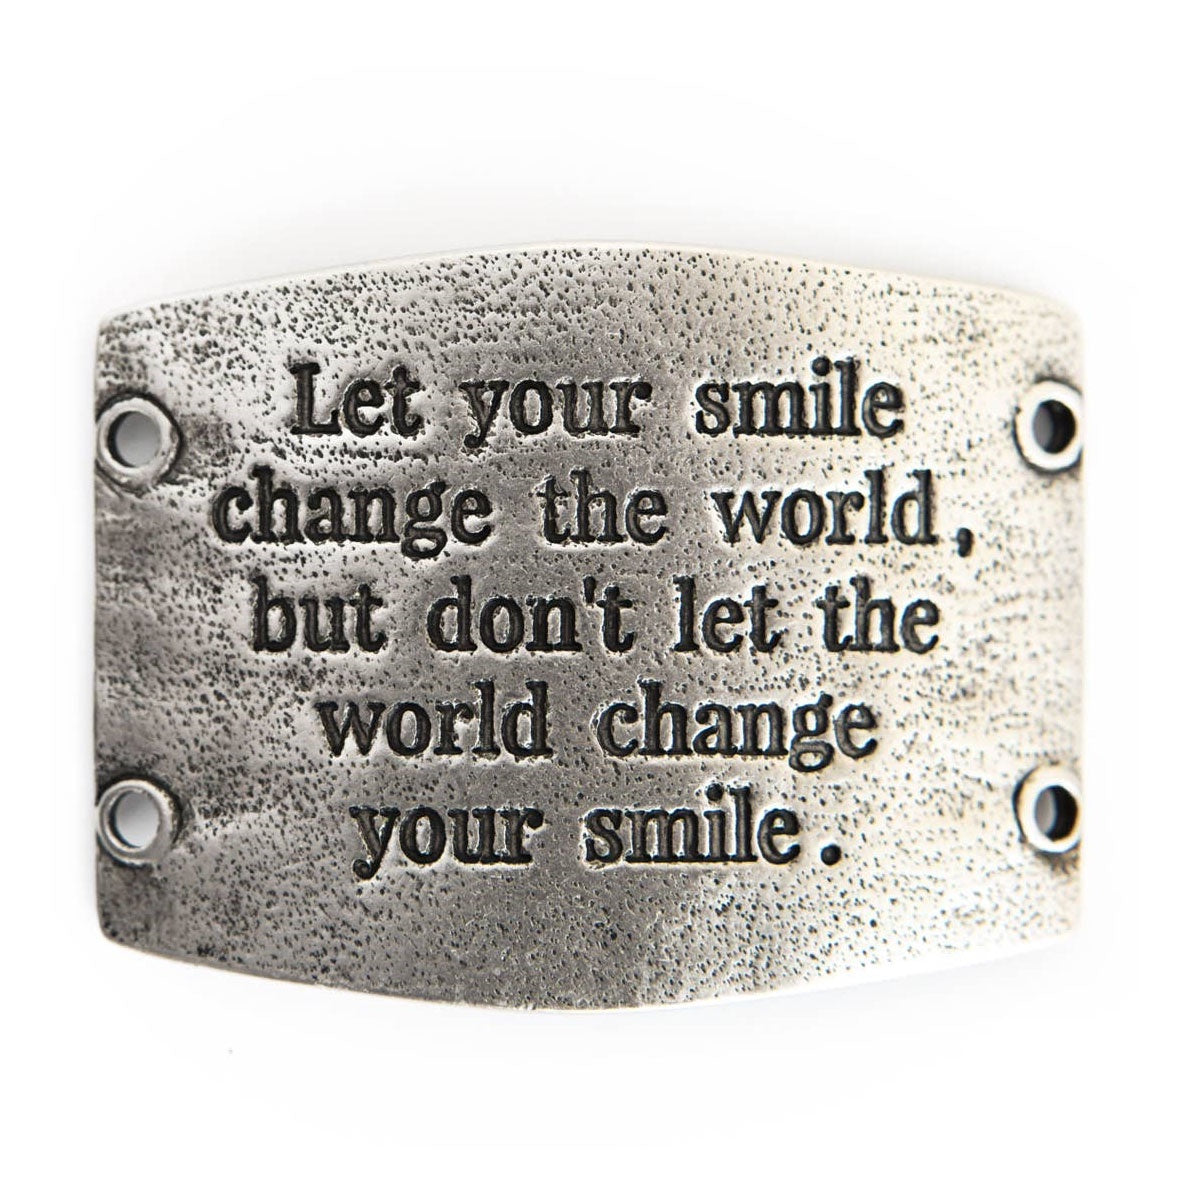 Vintage silver Lenny & Eva bracelet sentiment that says, "Let your smile change the world, but don't let the world change your smile."